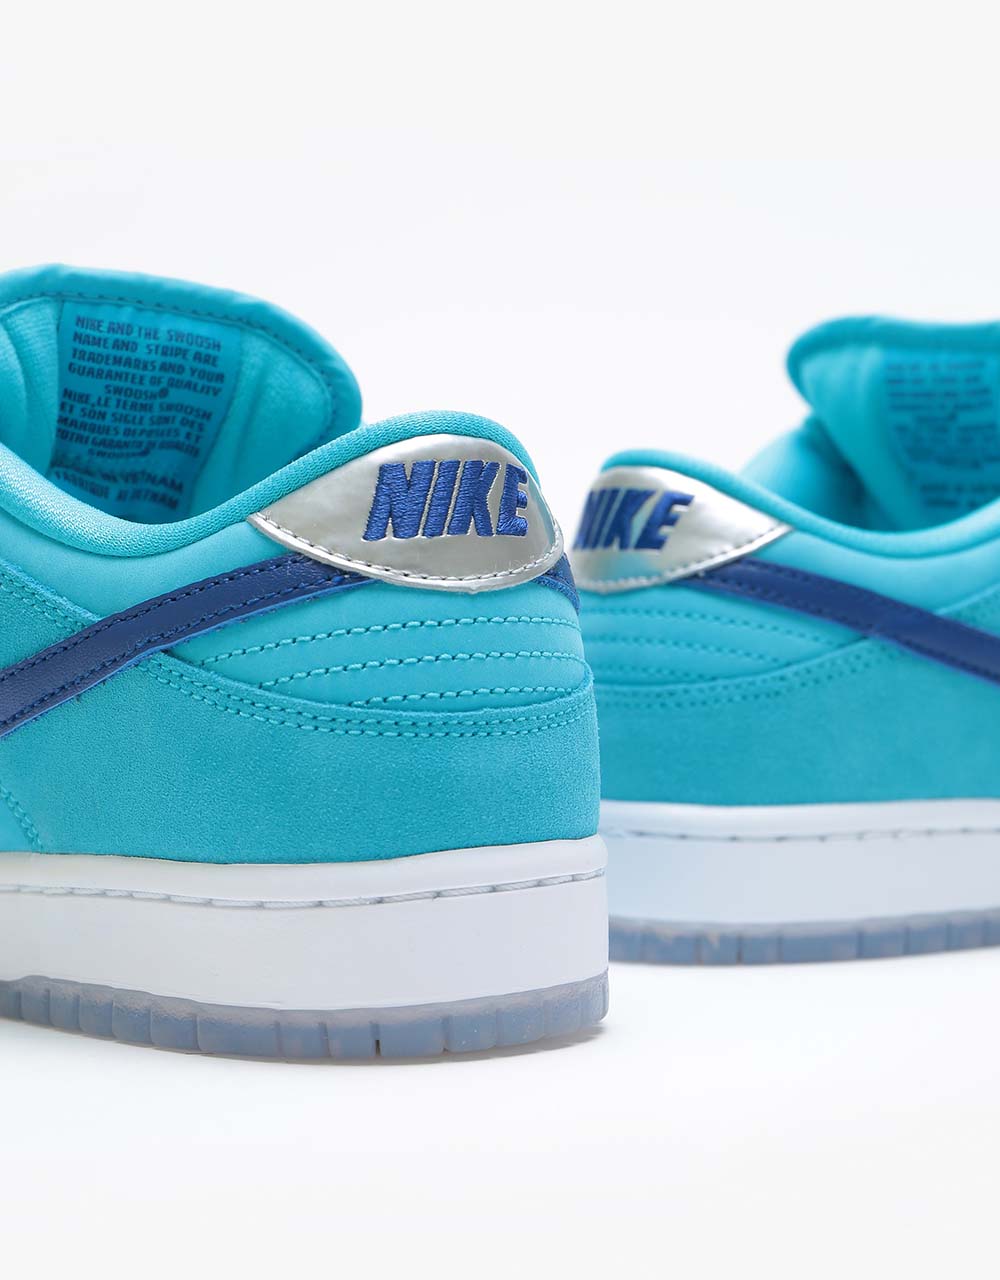 Nike SB Dunk Low Pro Skate Shoes - Blue Fury